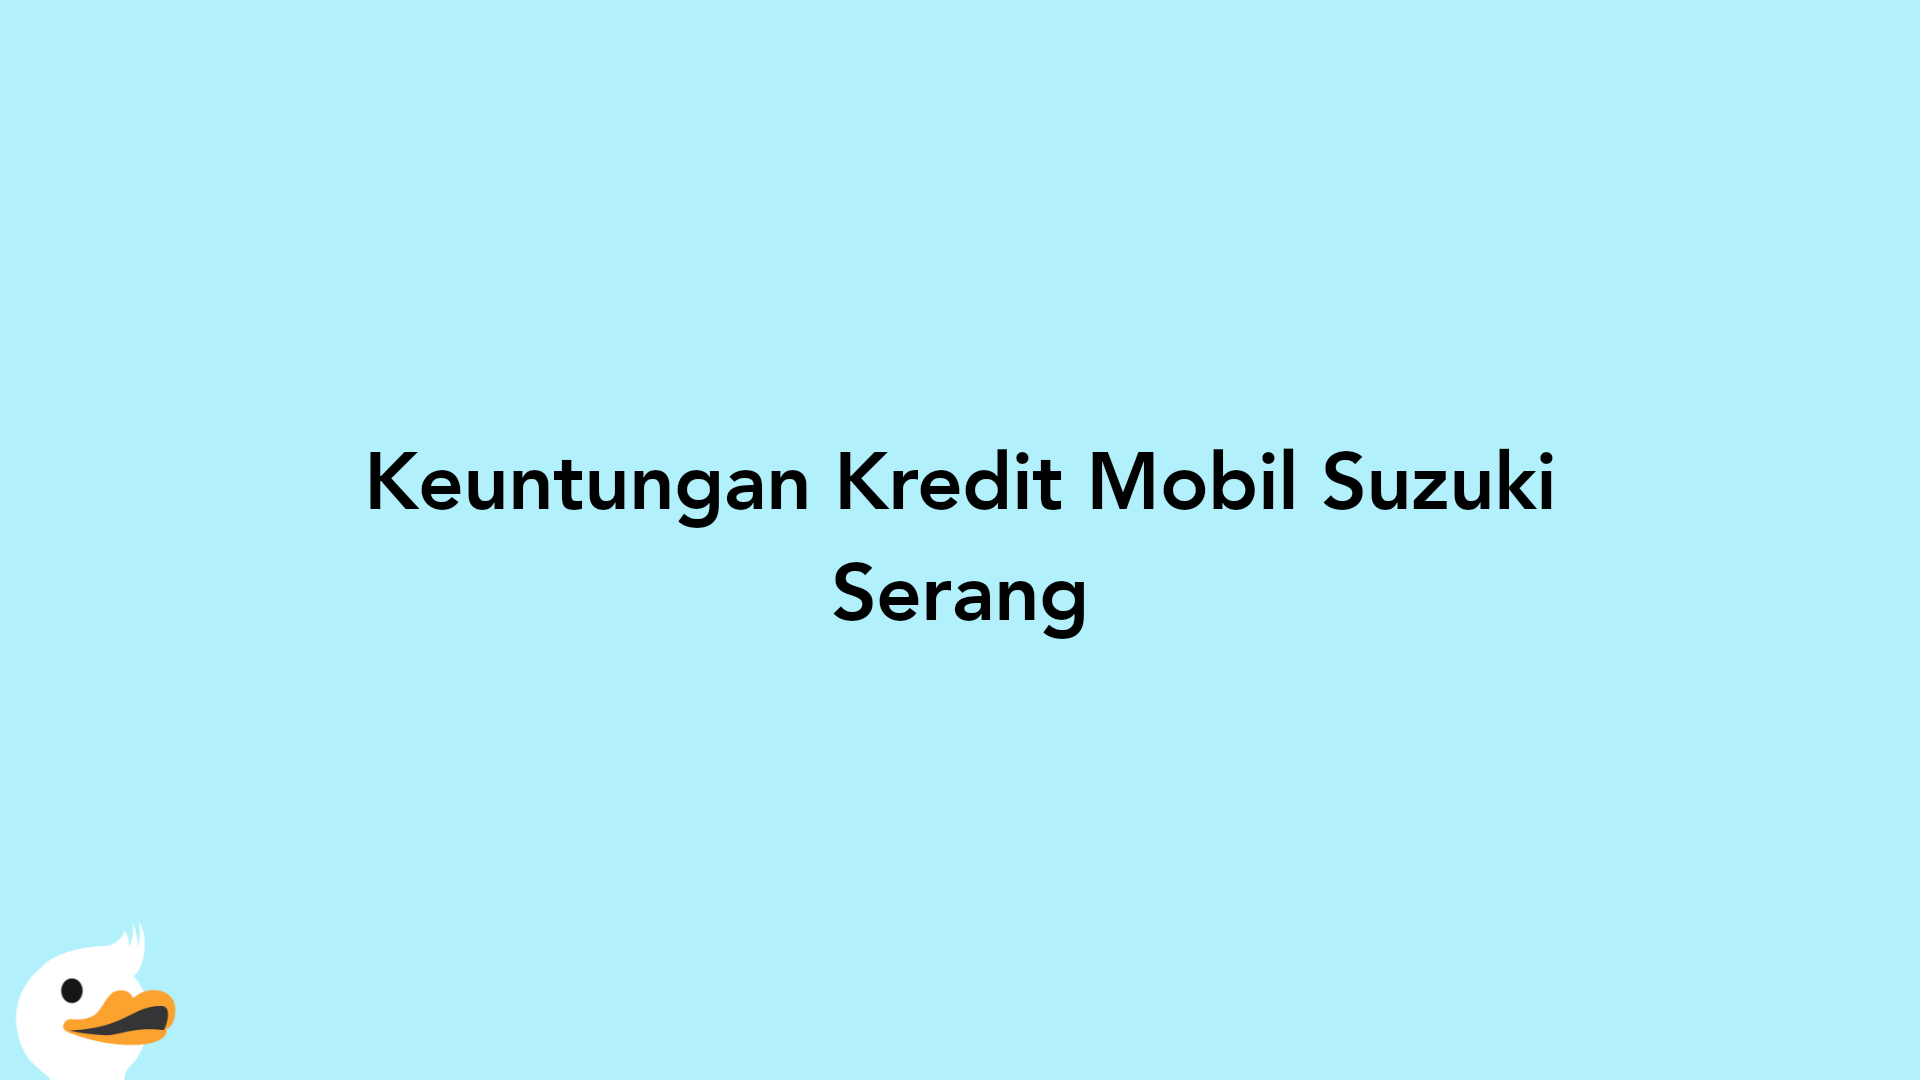 Keuntungan Kredit Mobil Suzuki Serang